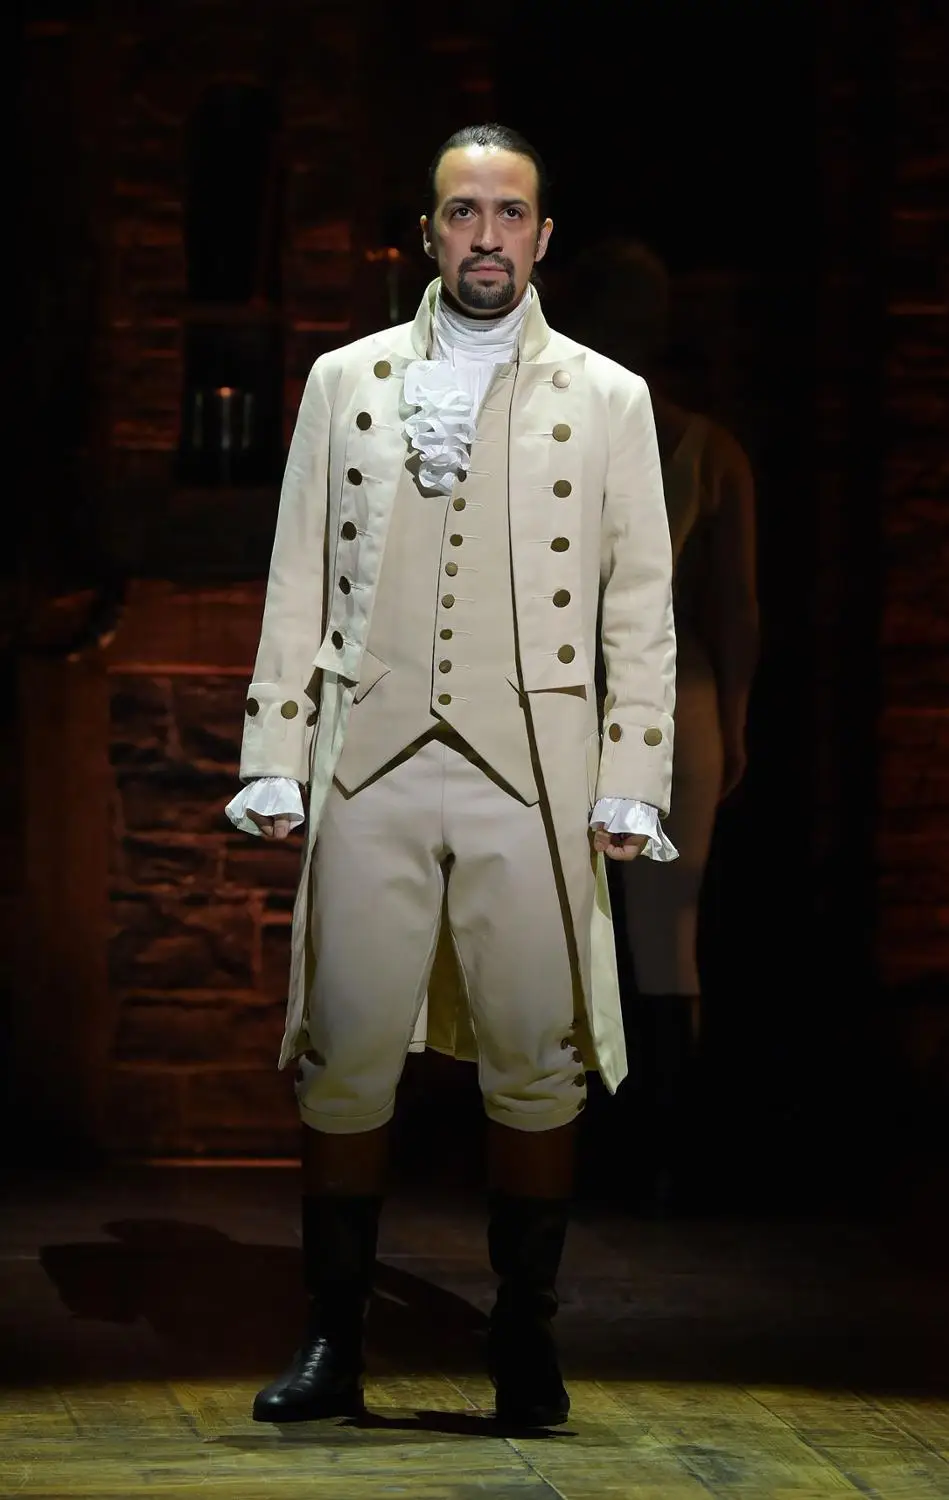 

Costumebuy musical Hamilton George Washington Drama Costume Civil War baroque Medieval Aristocrat Gentleman Suit Custom made